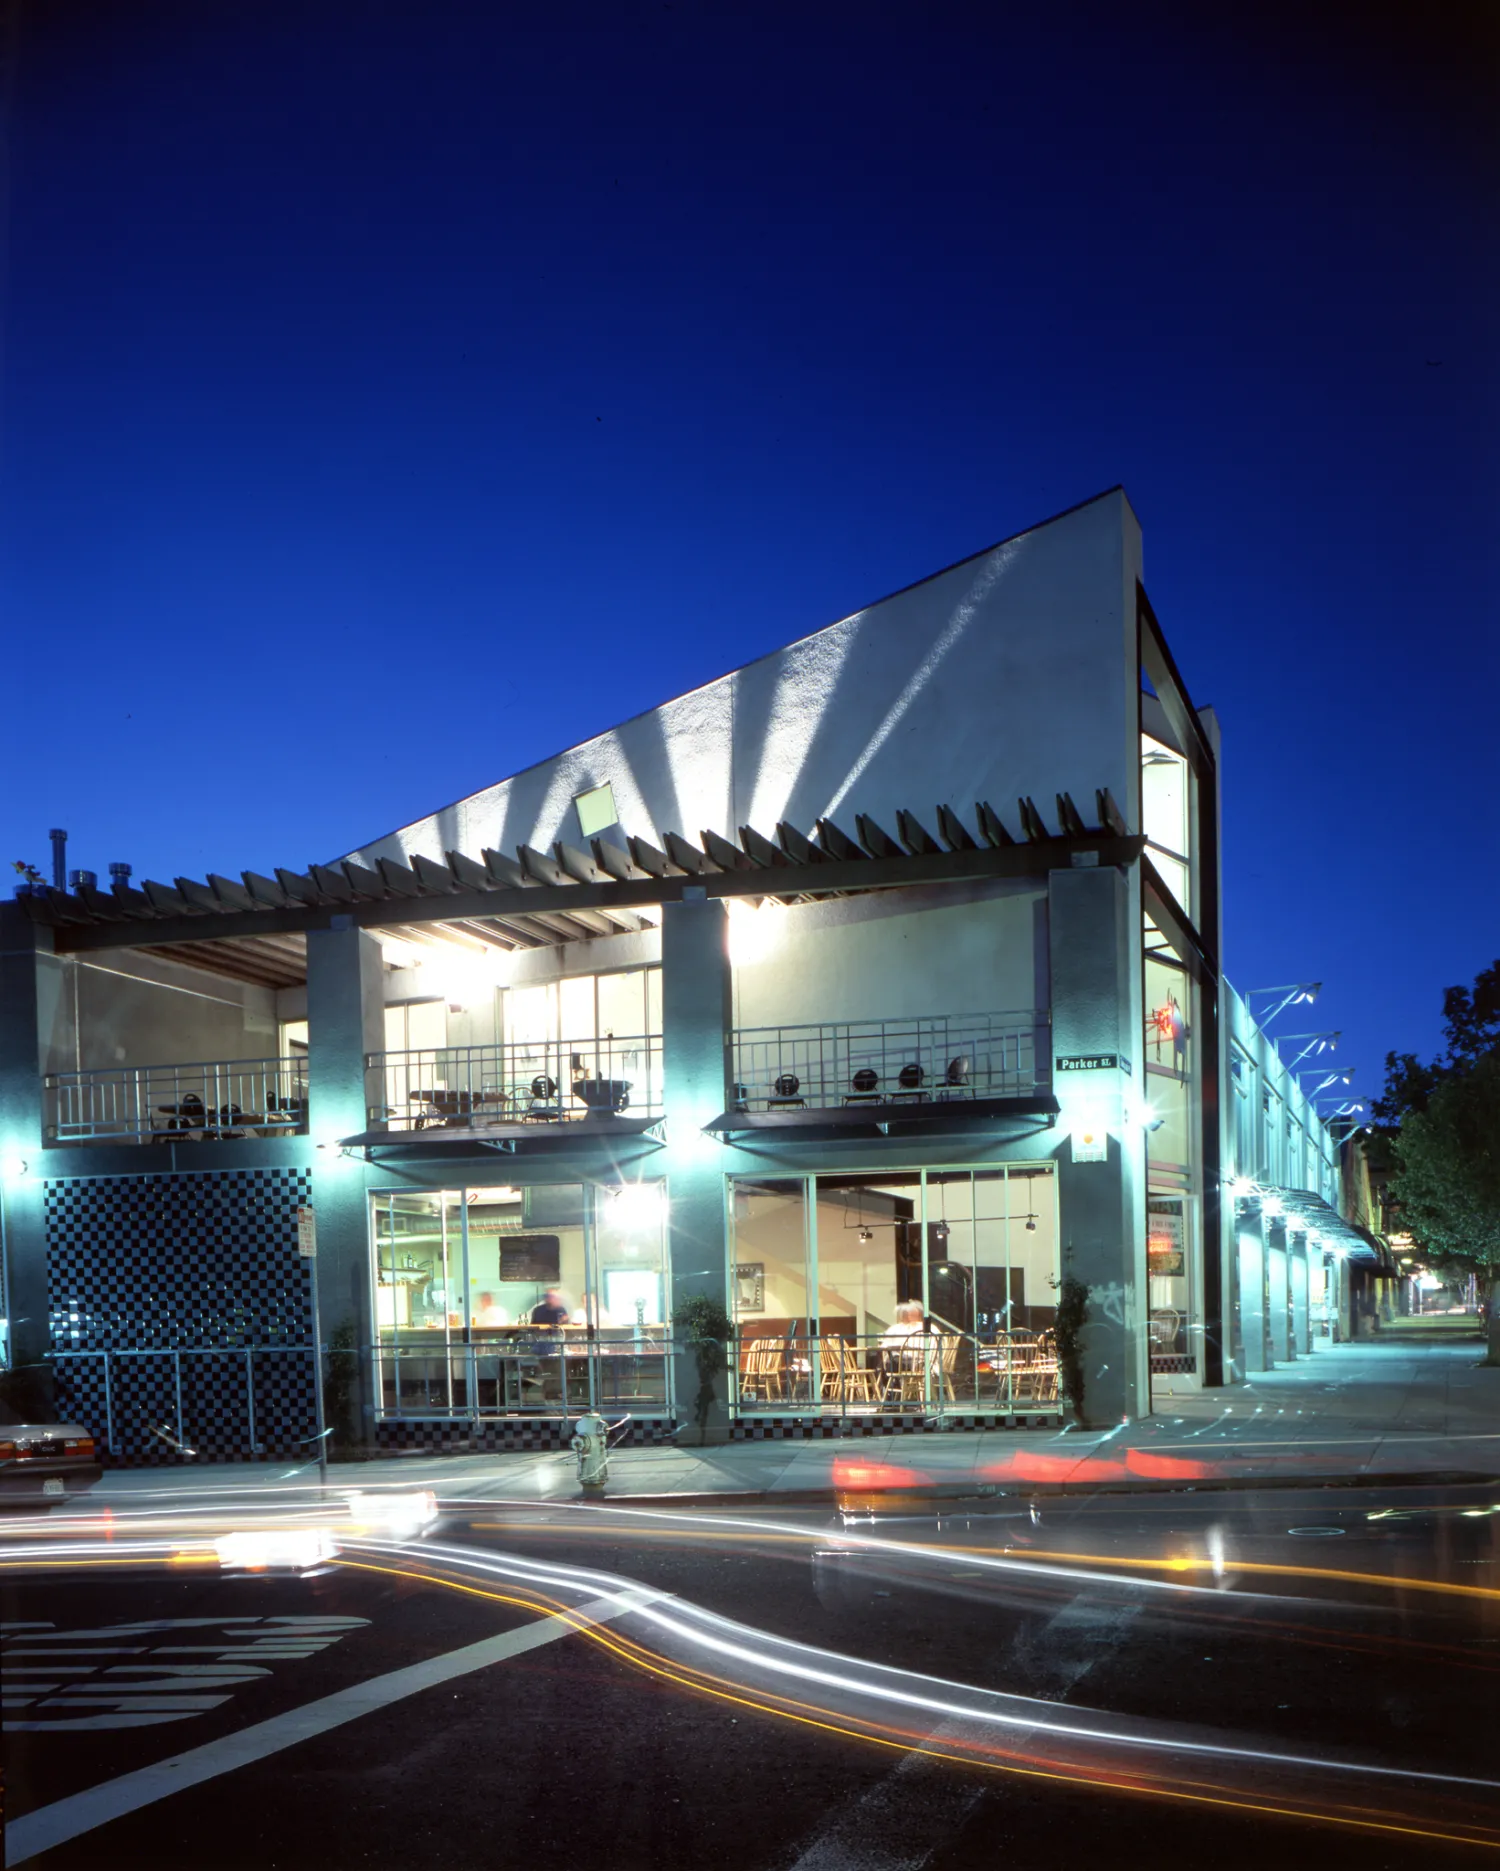 Exterior view of Bison Building & Brew Pub at night in Berkeley, California.